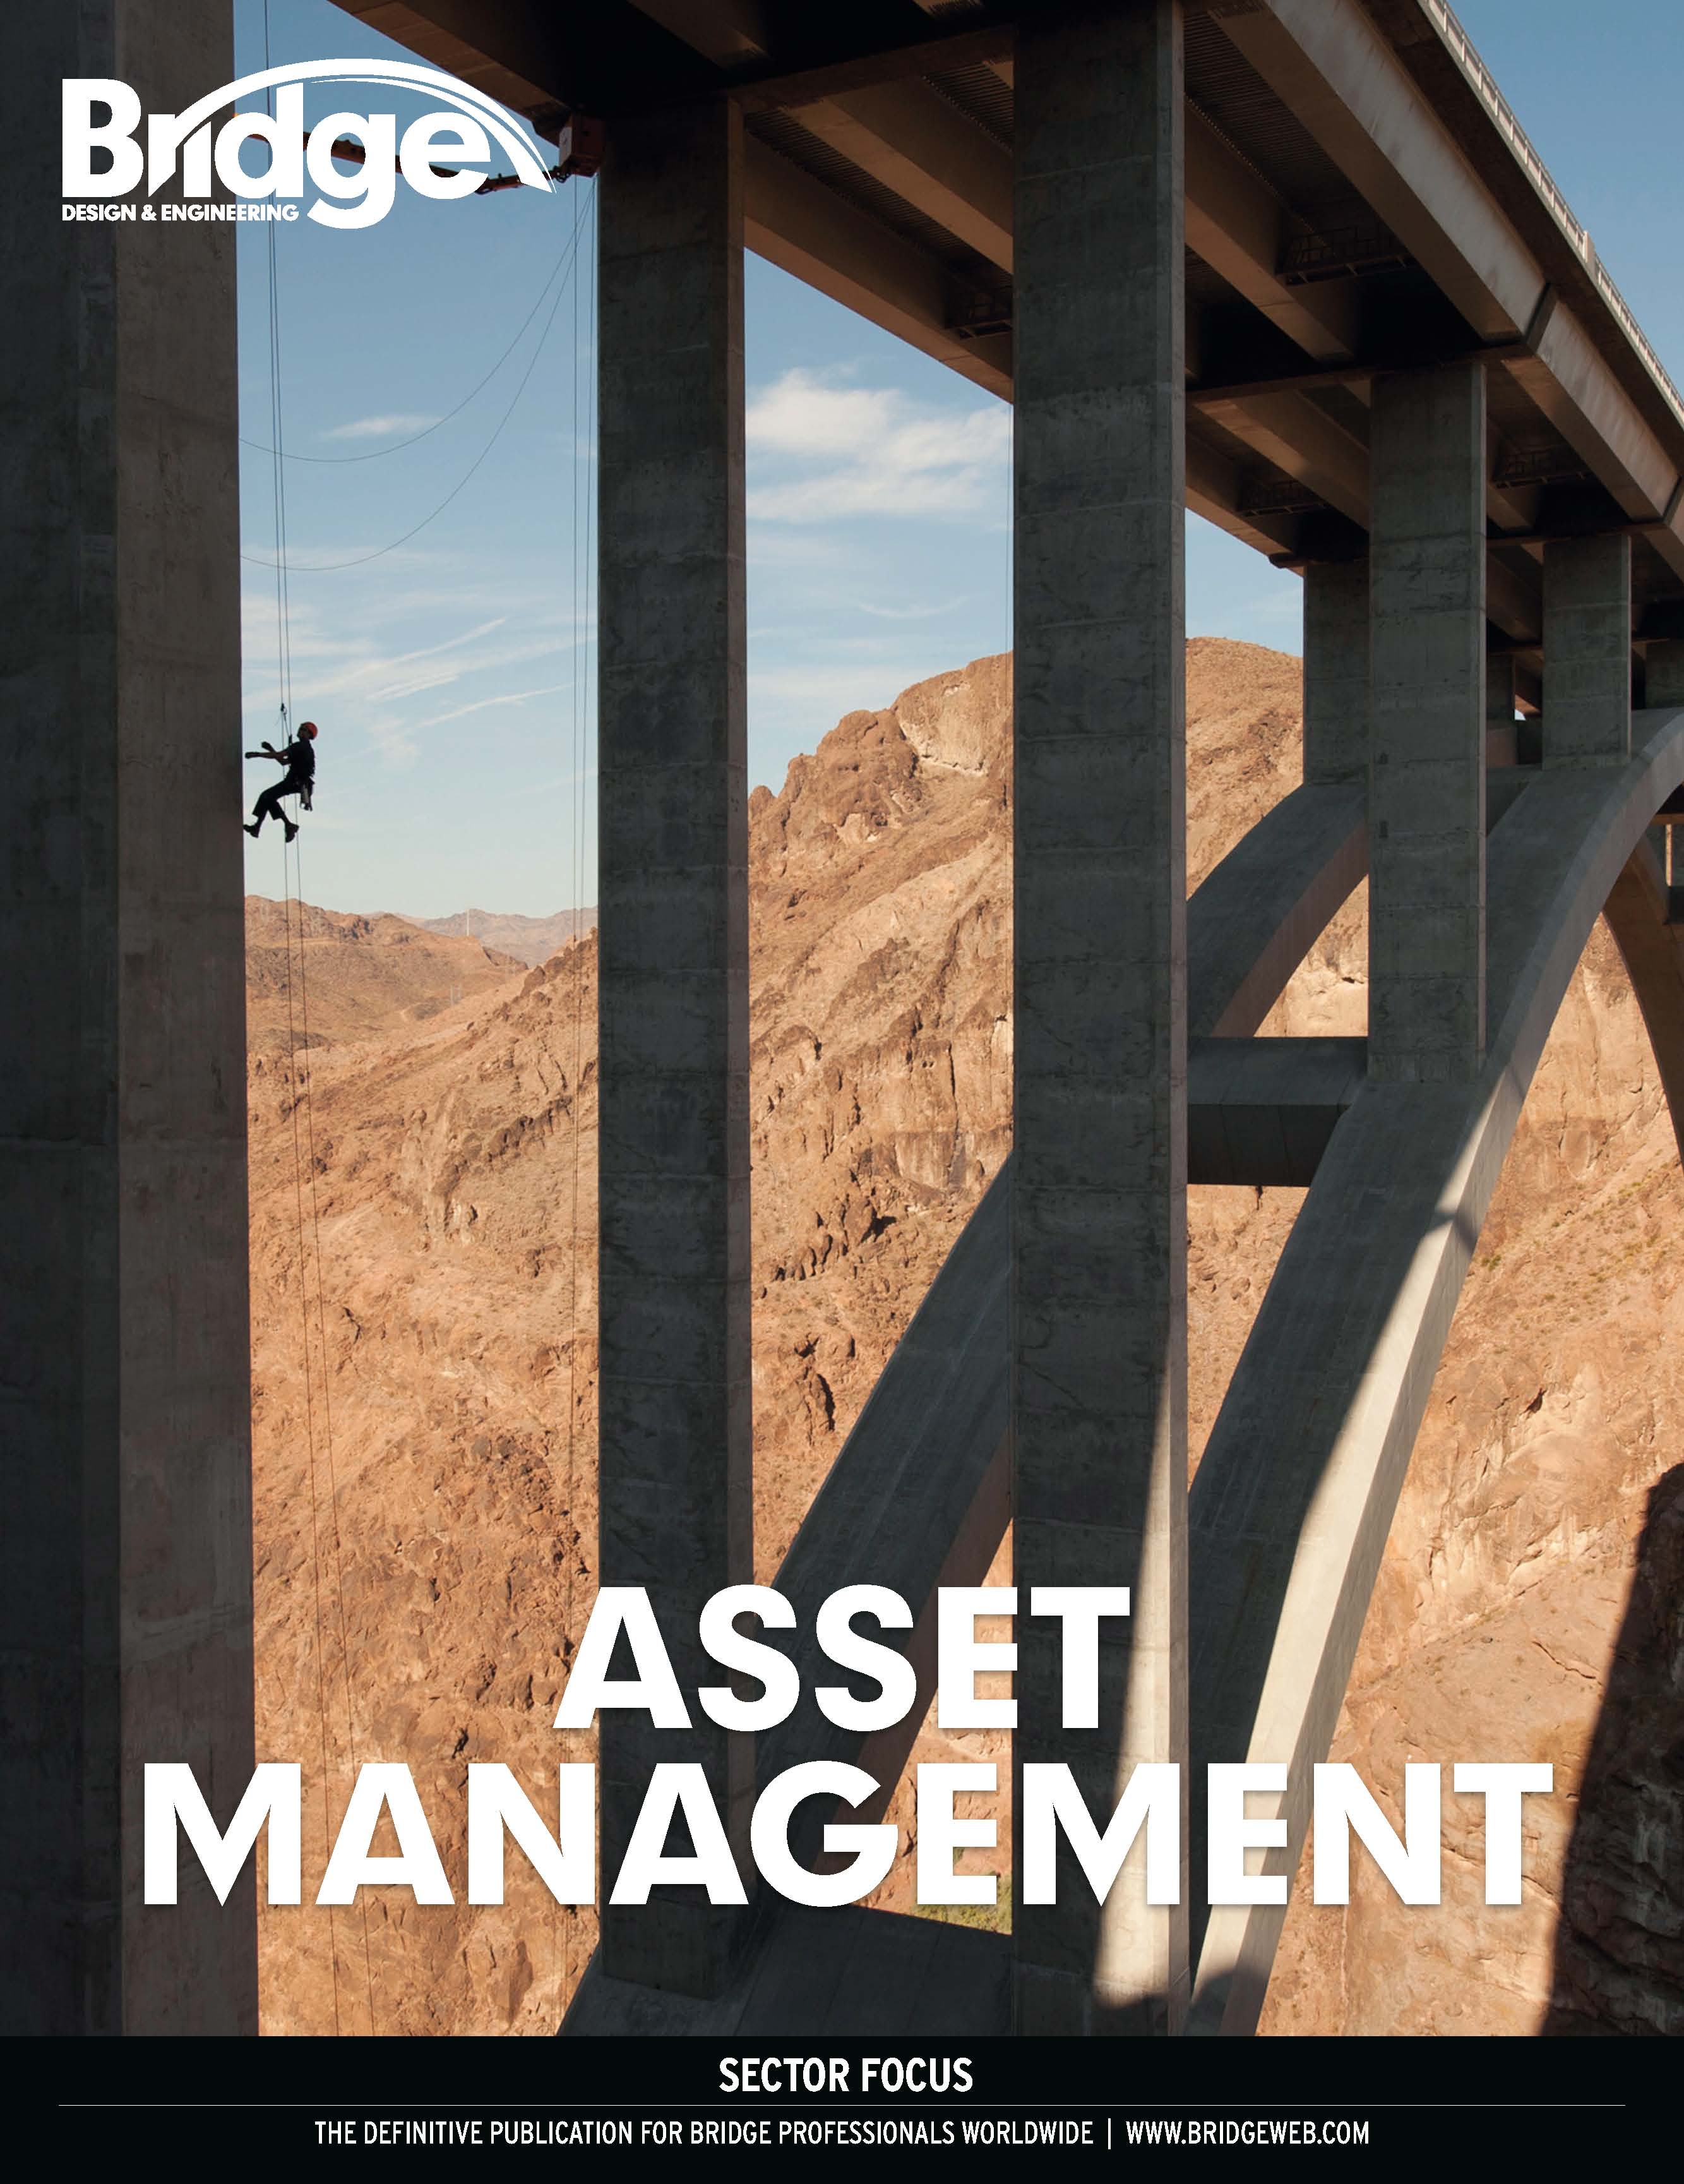 Asset management